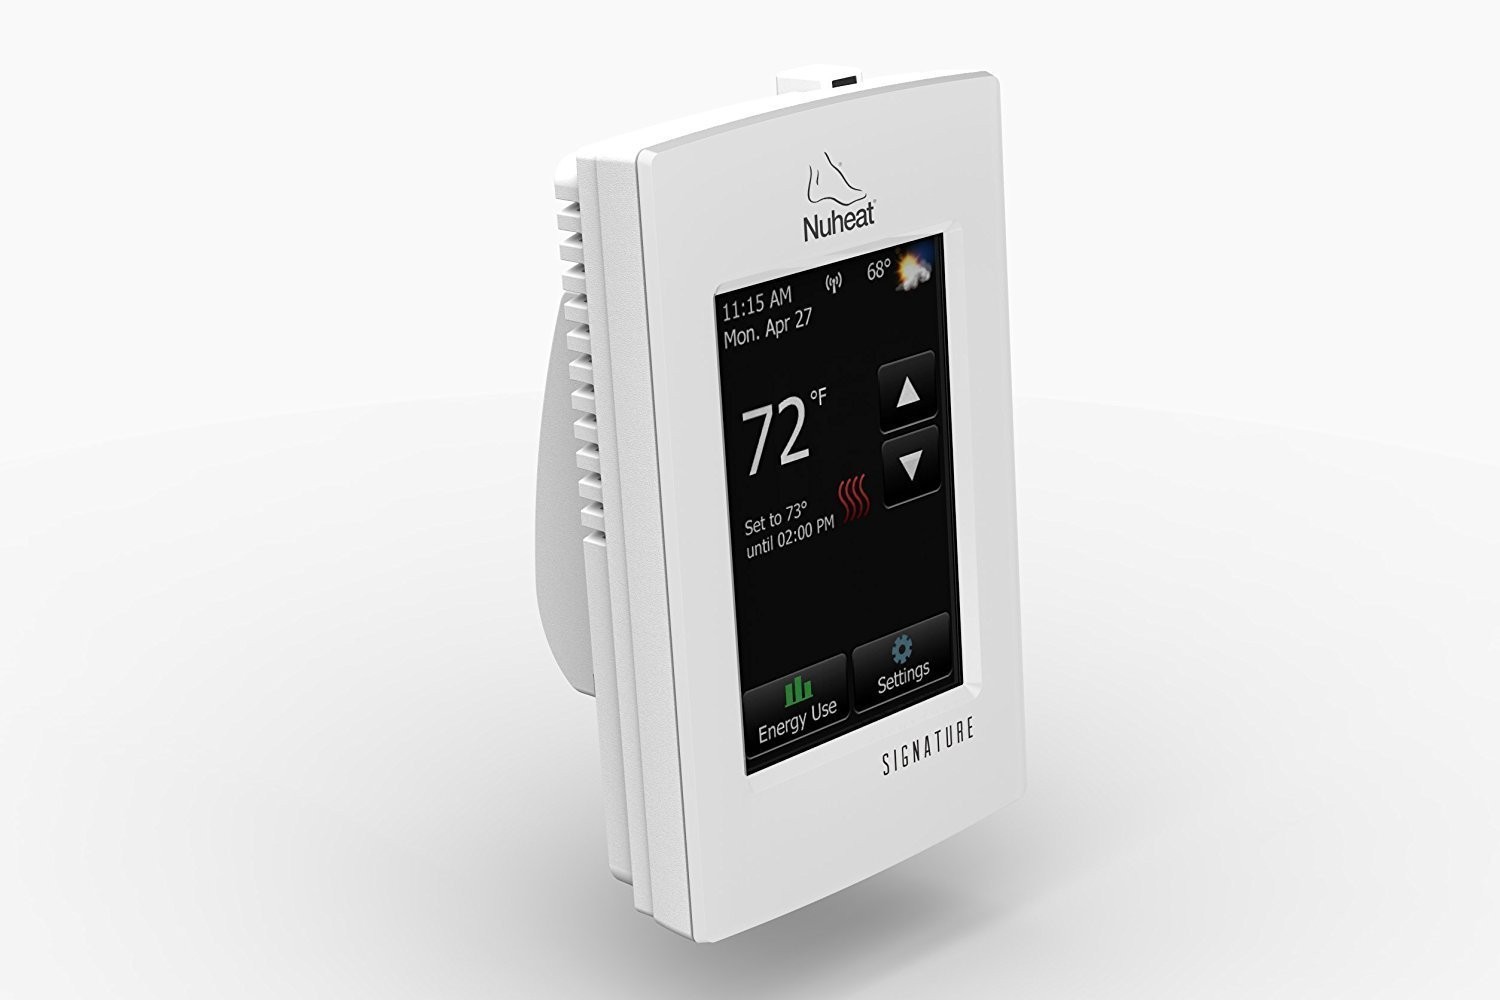 NUHEAT AC0055 SIGNATURE WiFi Touchscreen Programmable Dual Voltage Thermostat Amazon